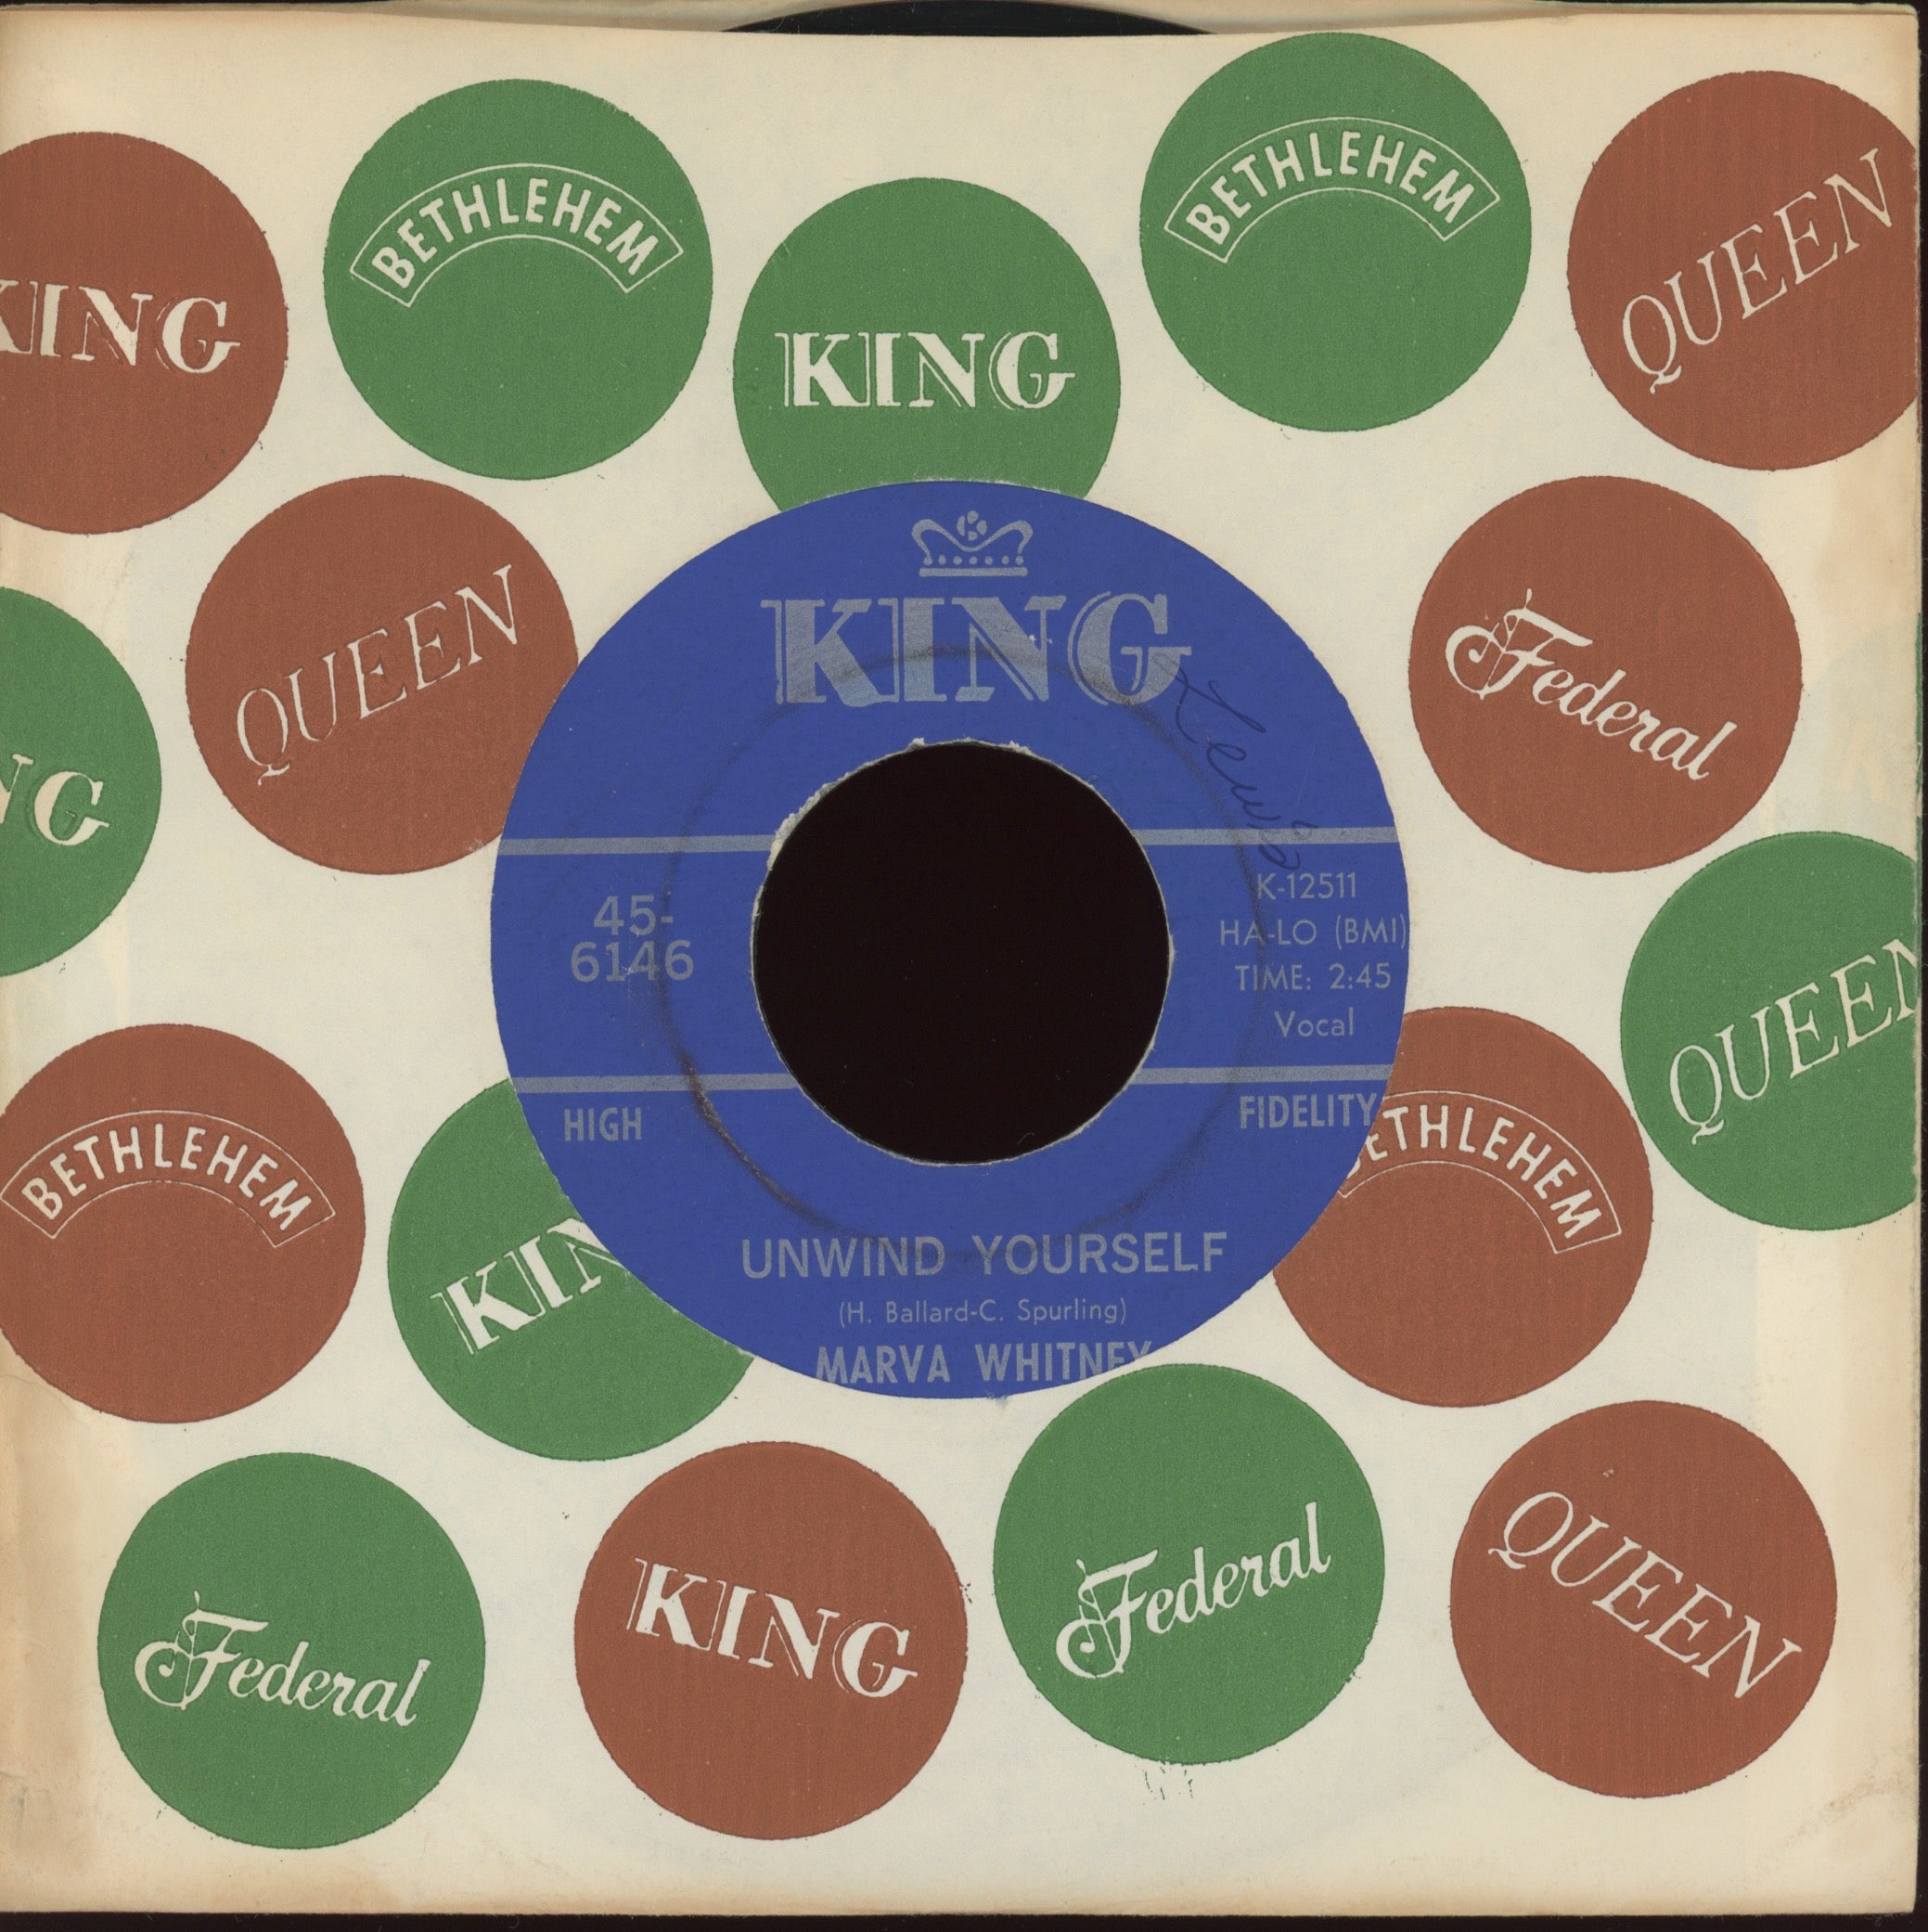 Marva Whitney - Unwind Yourself on King Funk 45